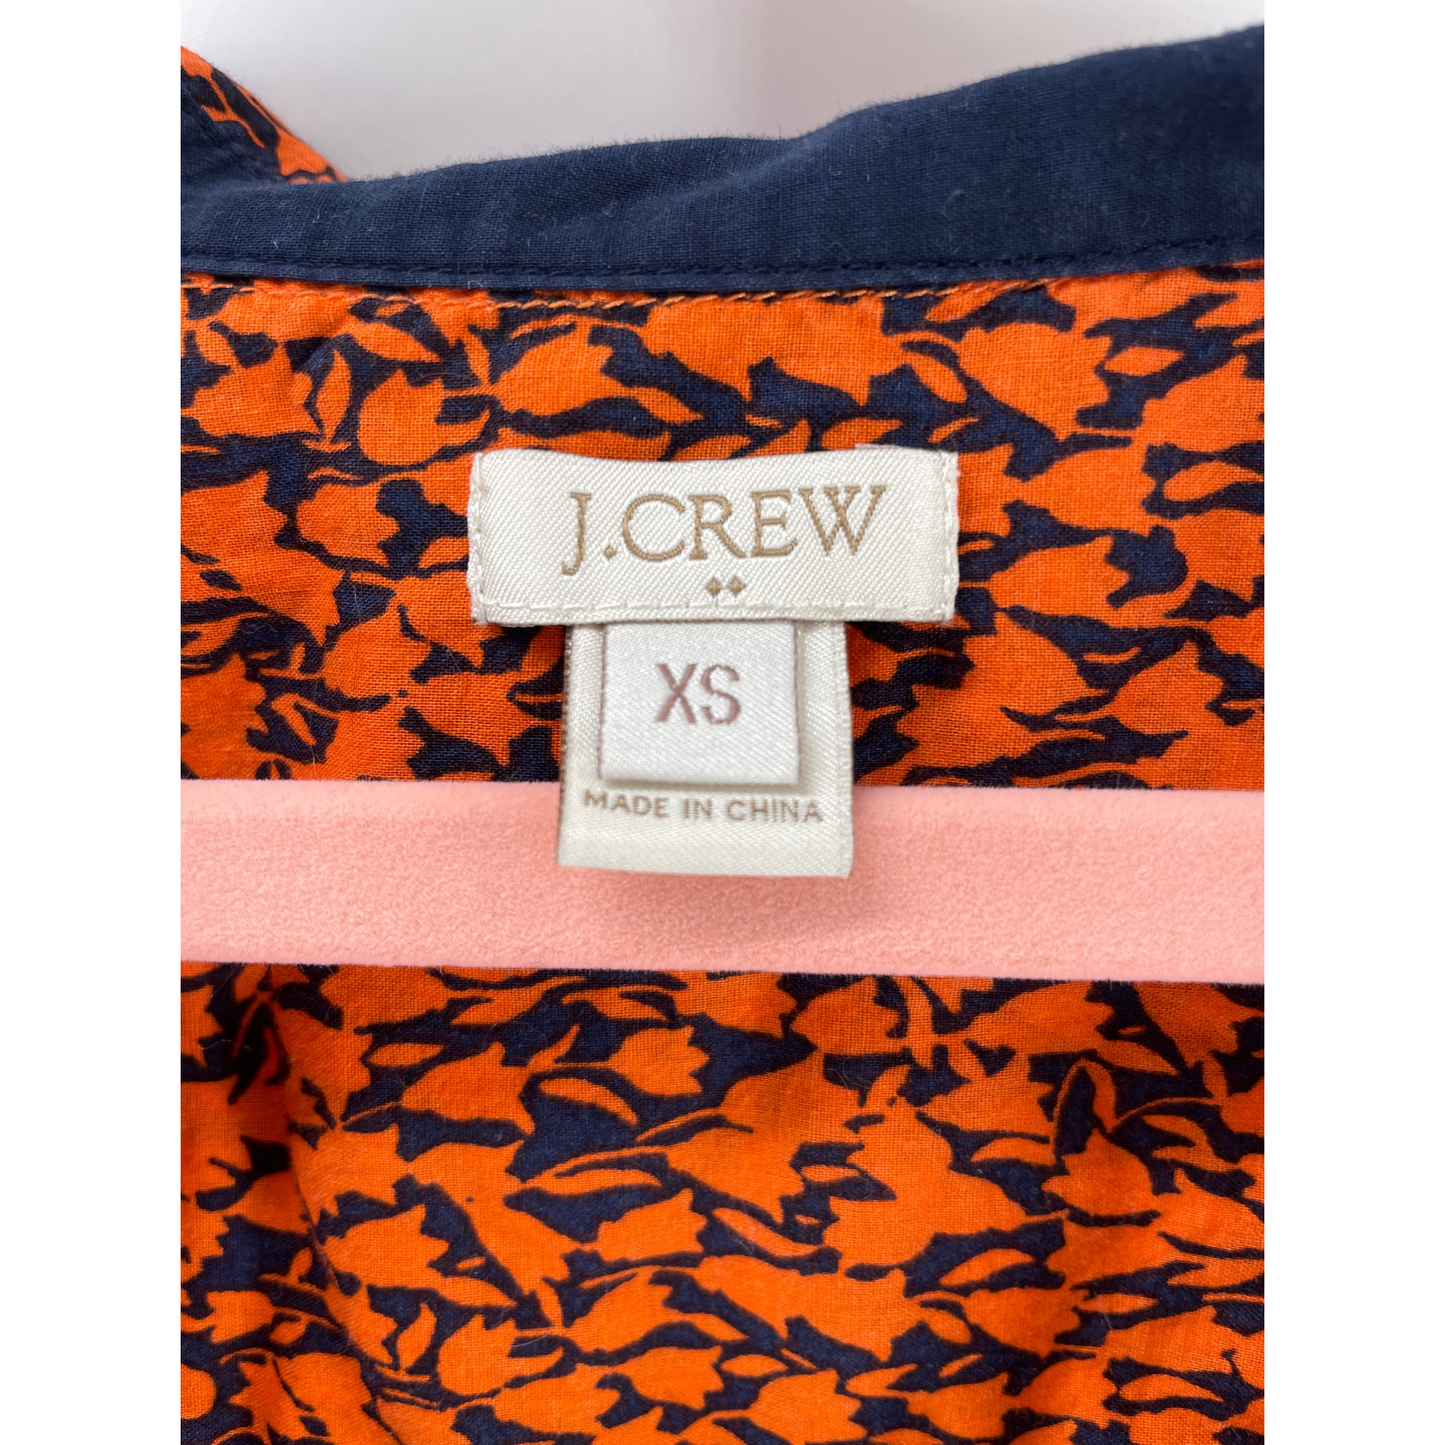 J. Crew Women’s XS Orange & Navy Long-Sleeved Button-Down Top